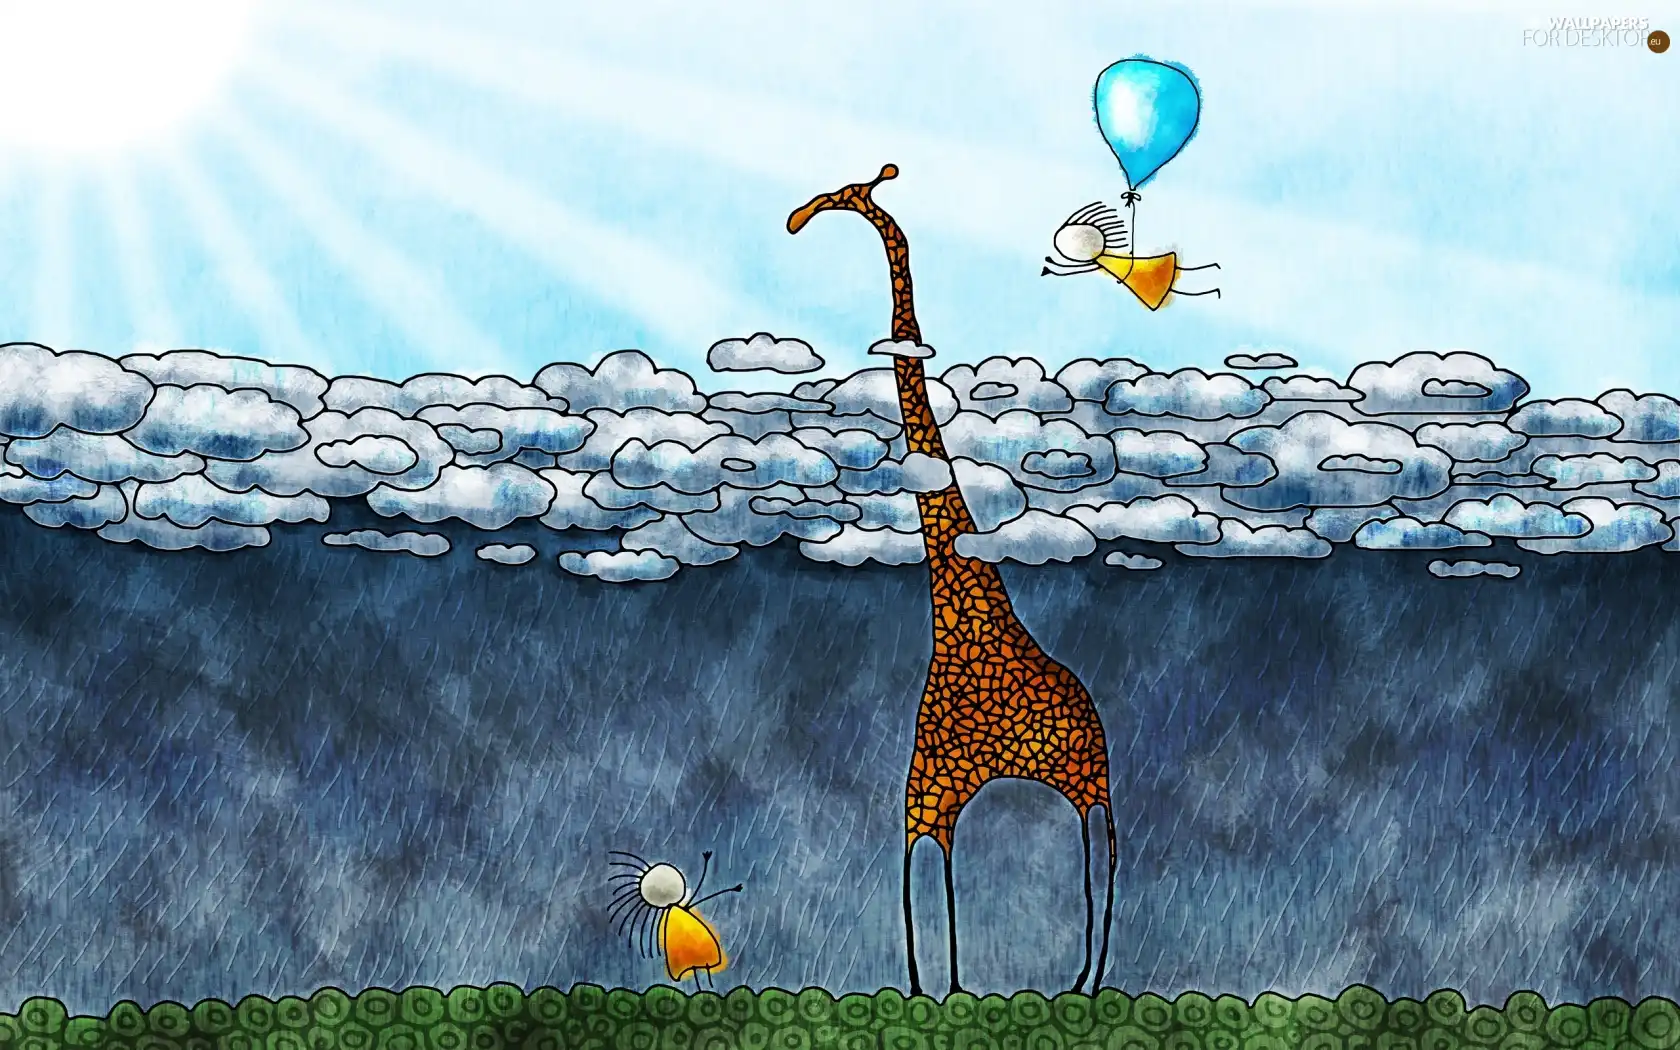 giraffe, clouds, Kids, more than